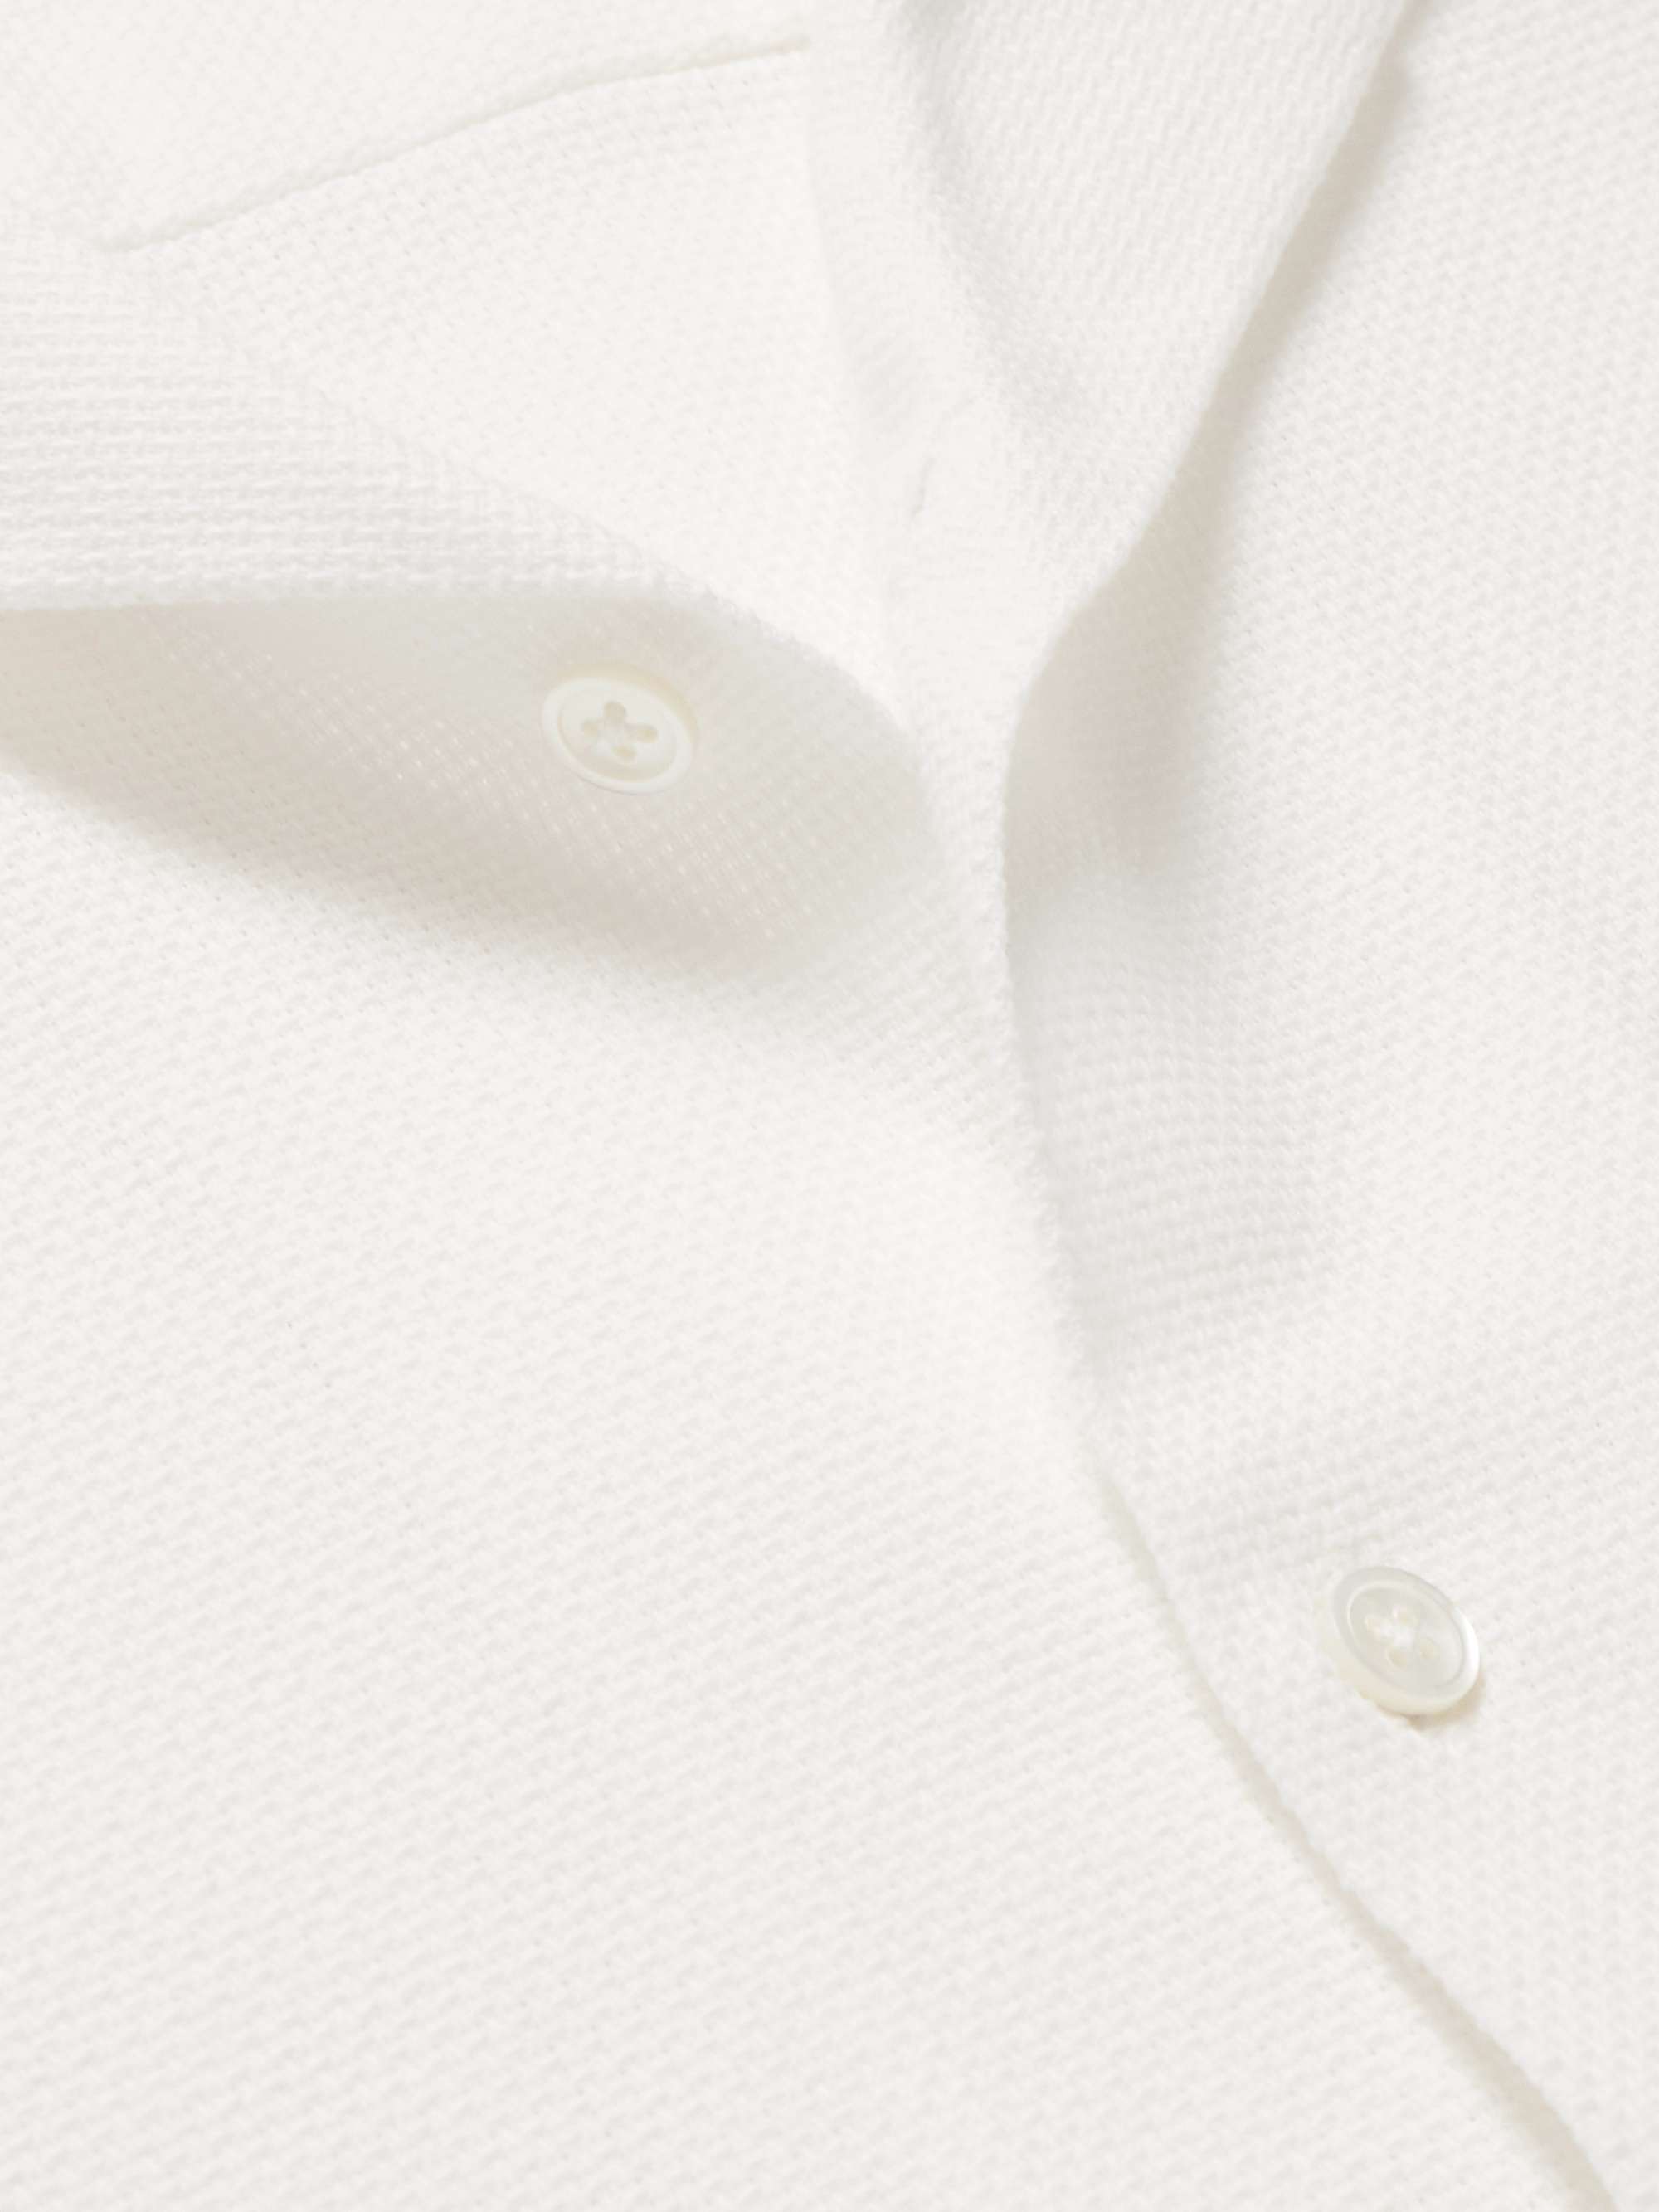 PORTUGUESE FLANNEL Convertible-Collar Cotton-Piqué Shirt